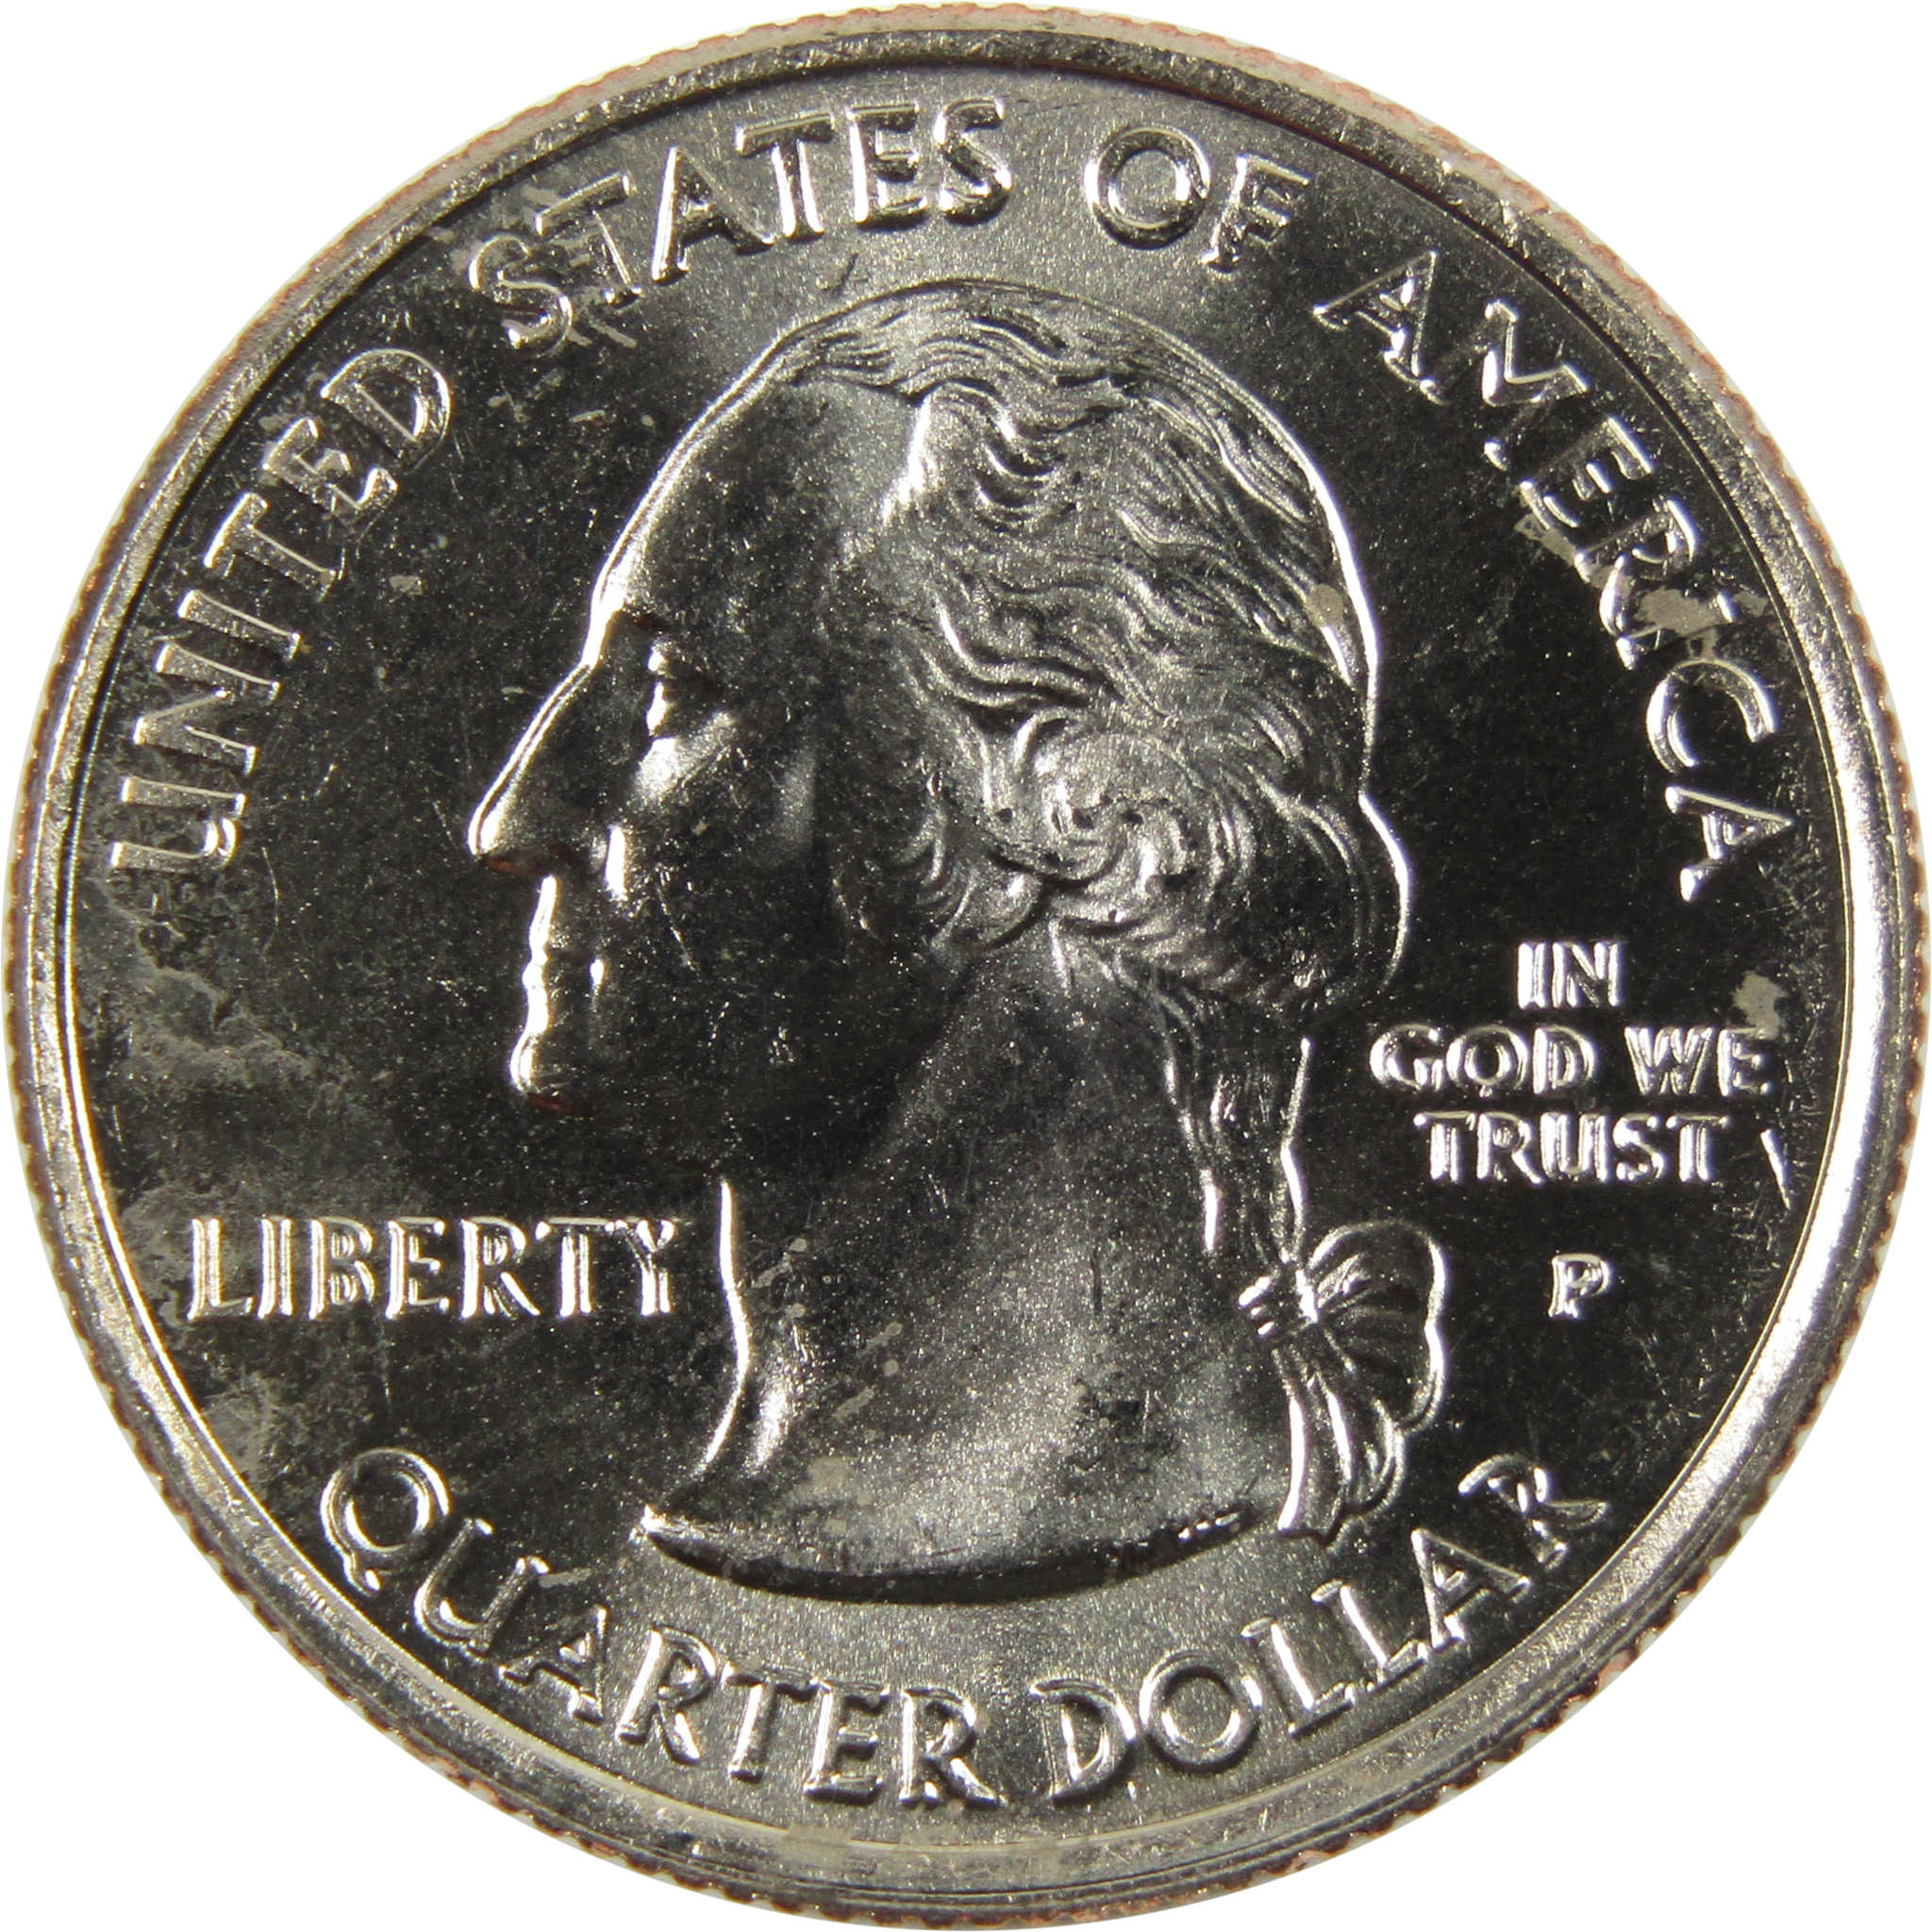 2007 P Idaho State Quarter BU Uncirculated Clad 25c Coin